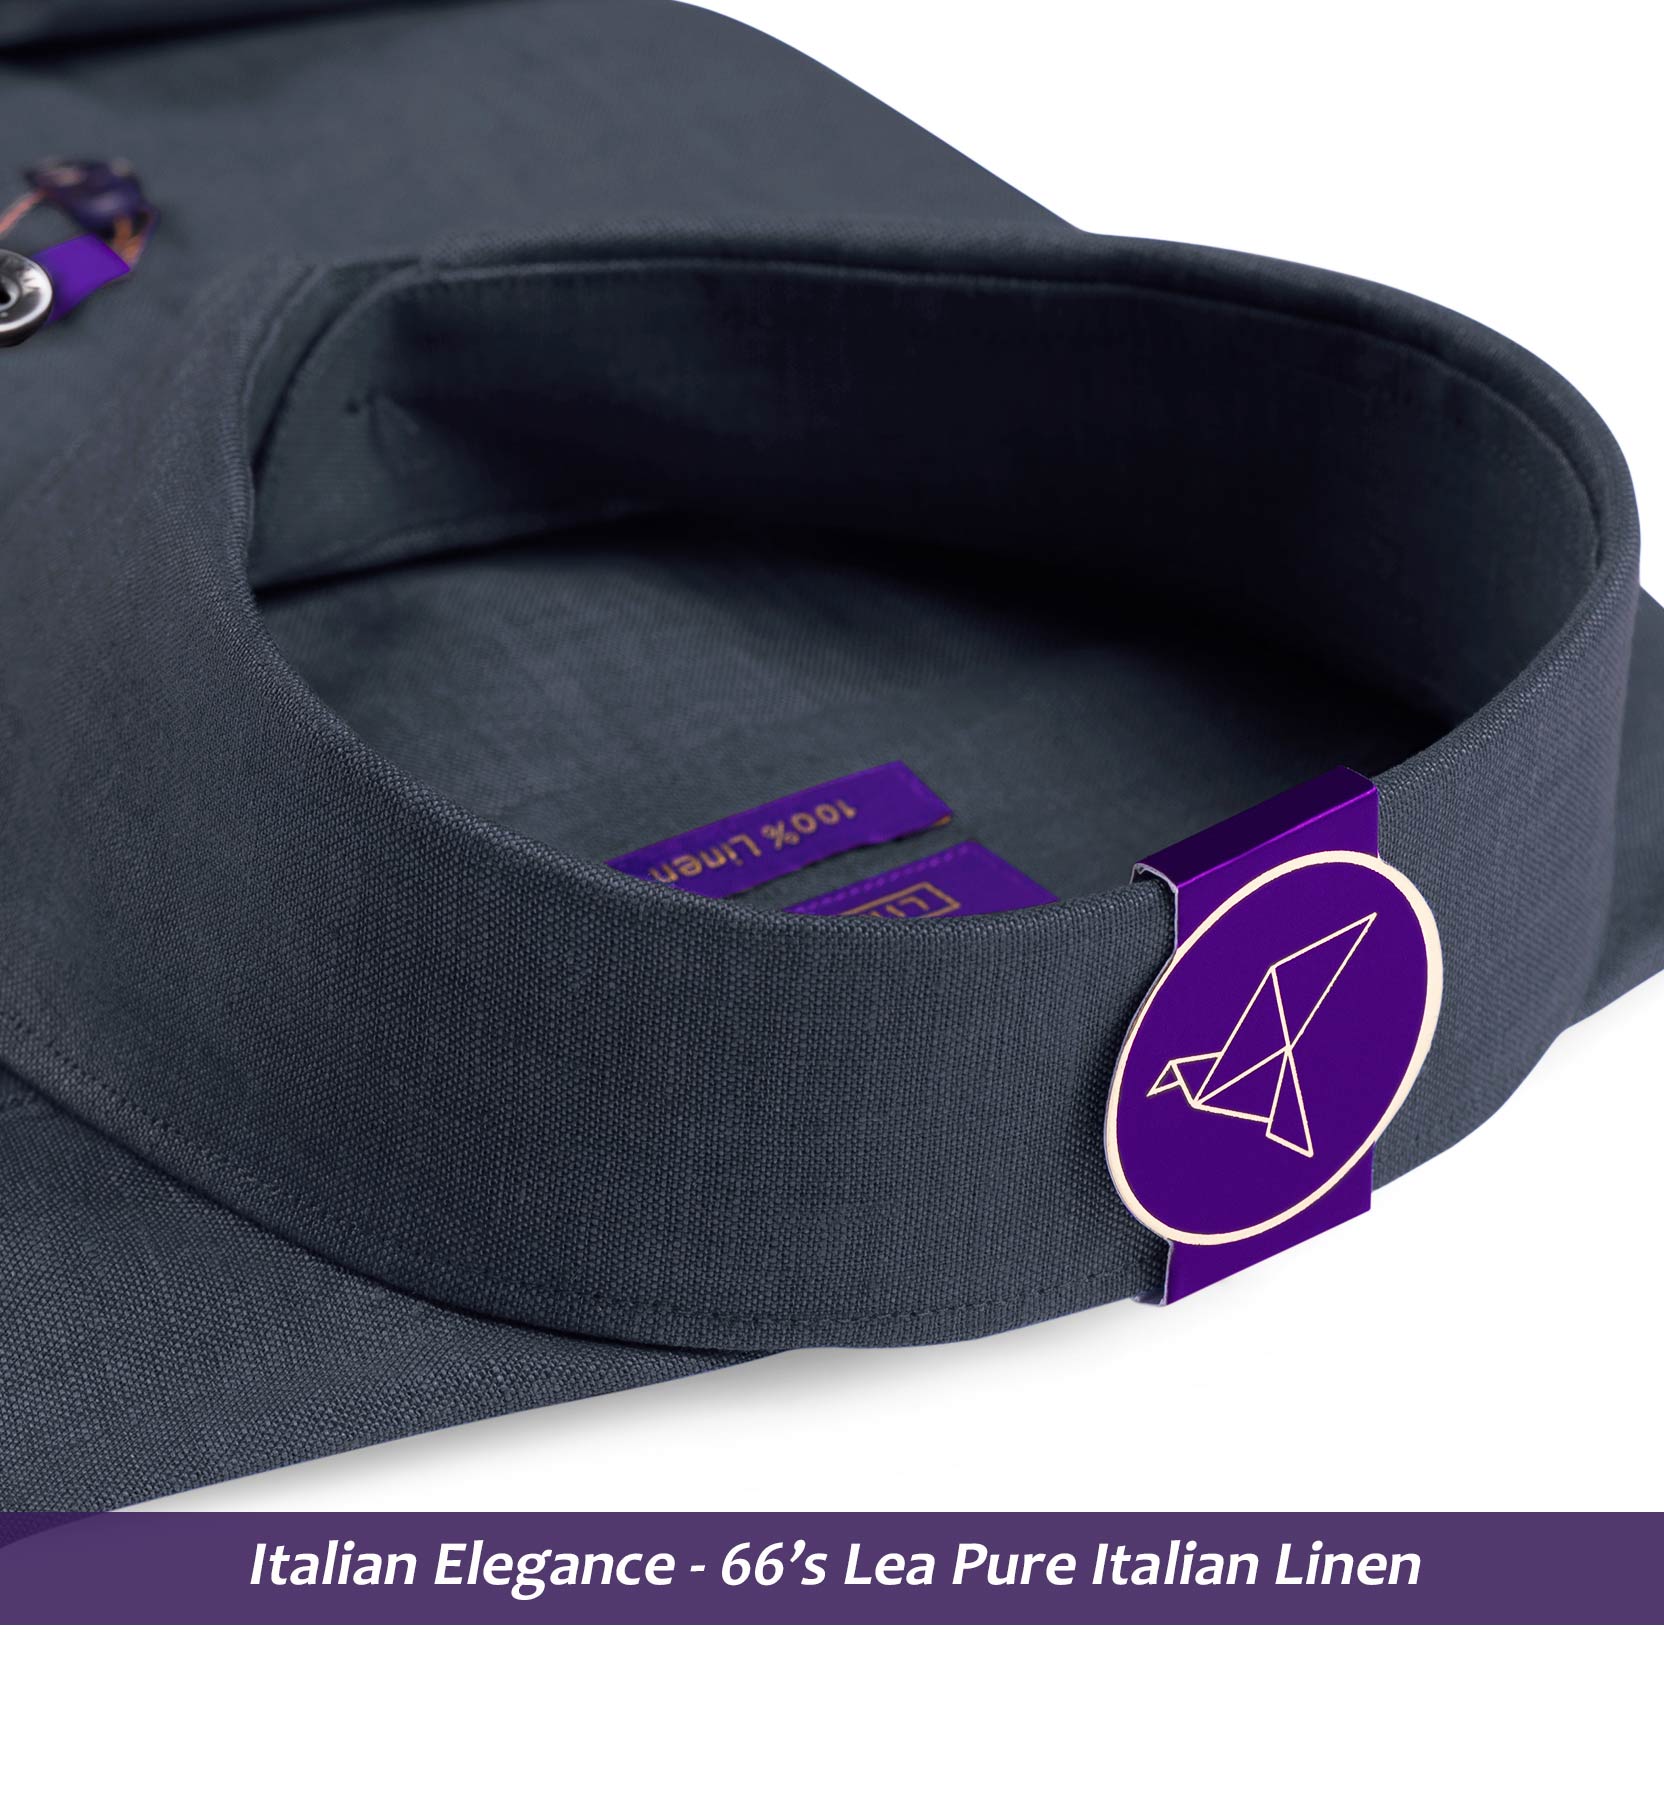 Seville- Slate Grey Solid Linen- 66's Lea Pure Italian Linen